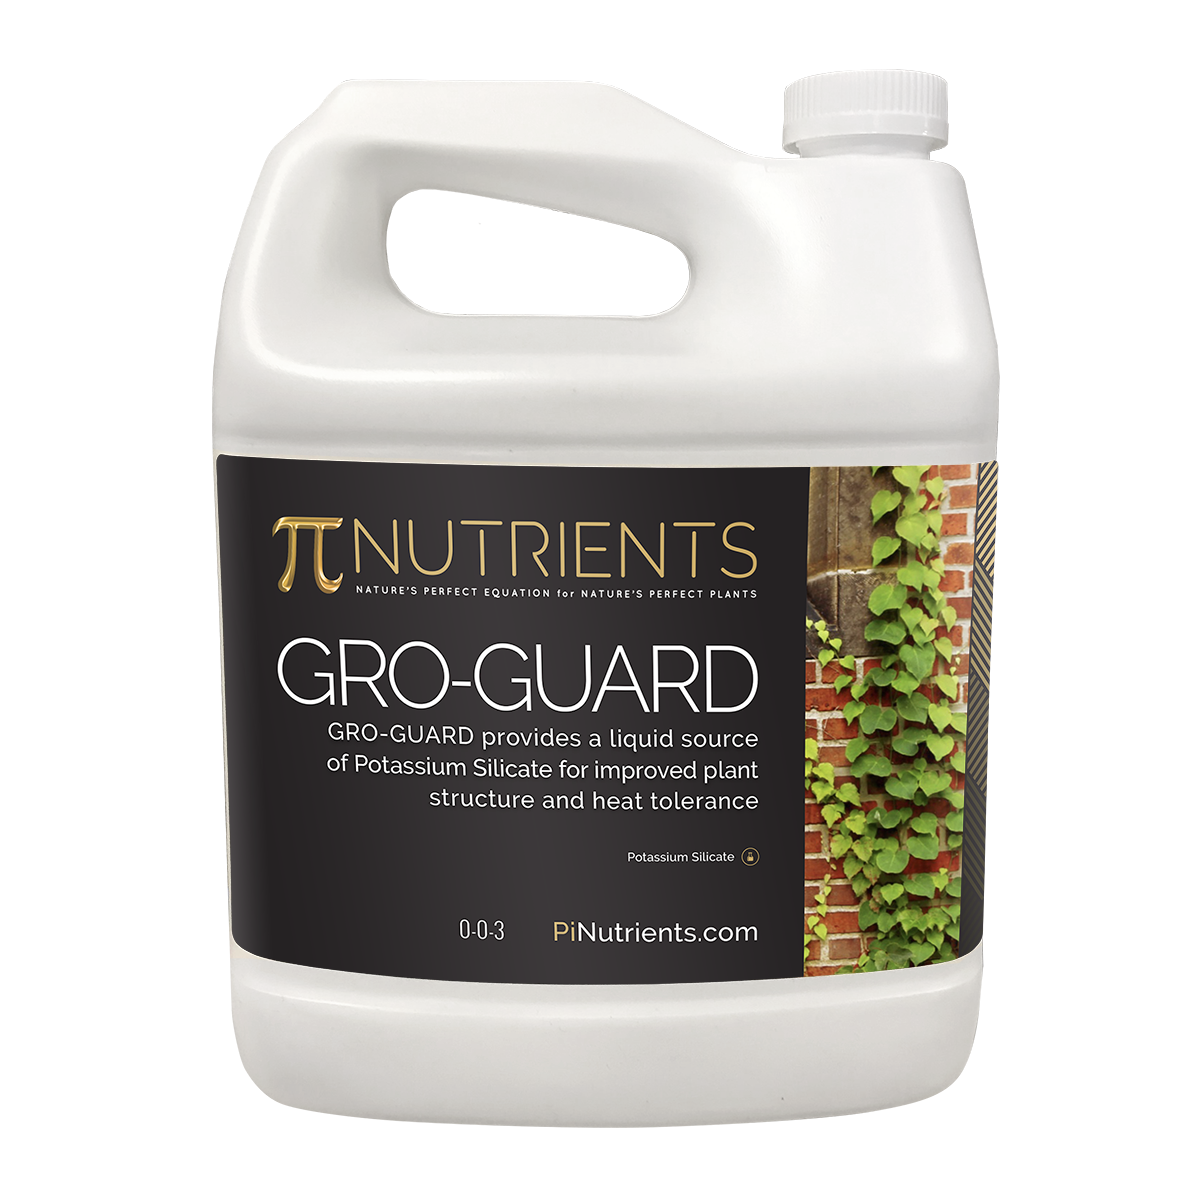 Pi Nutrients GRO-GUARD